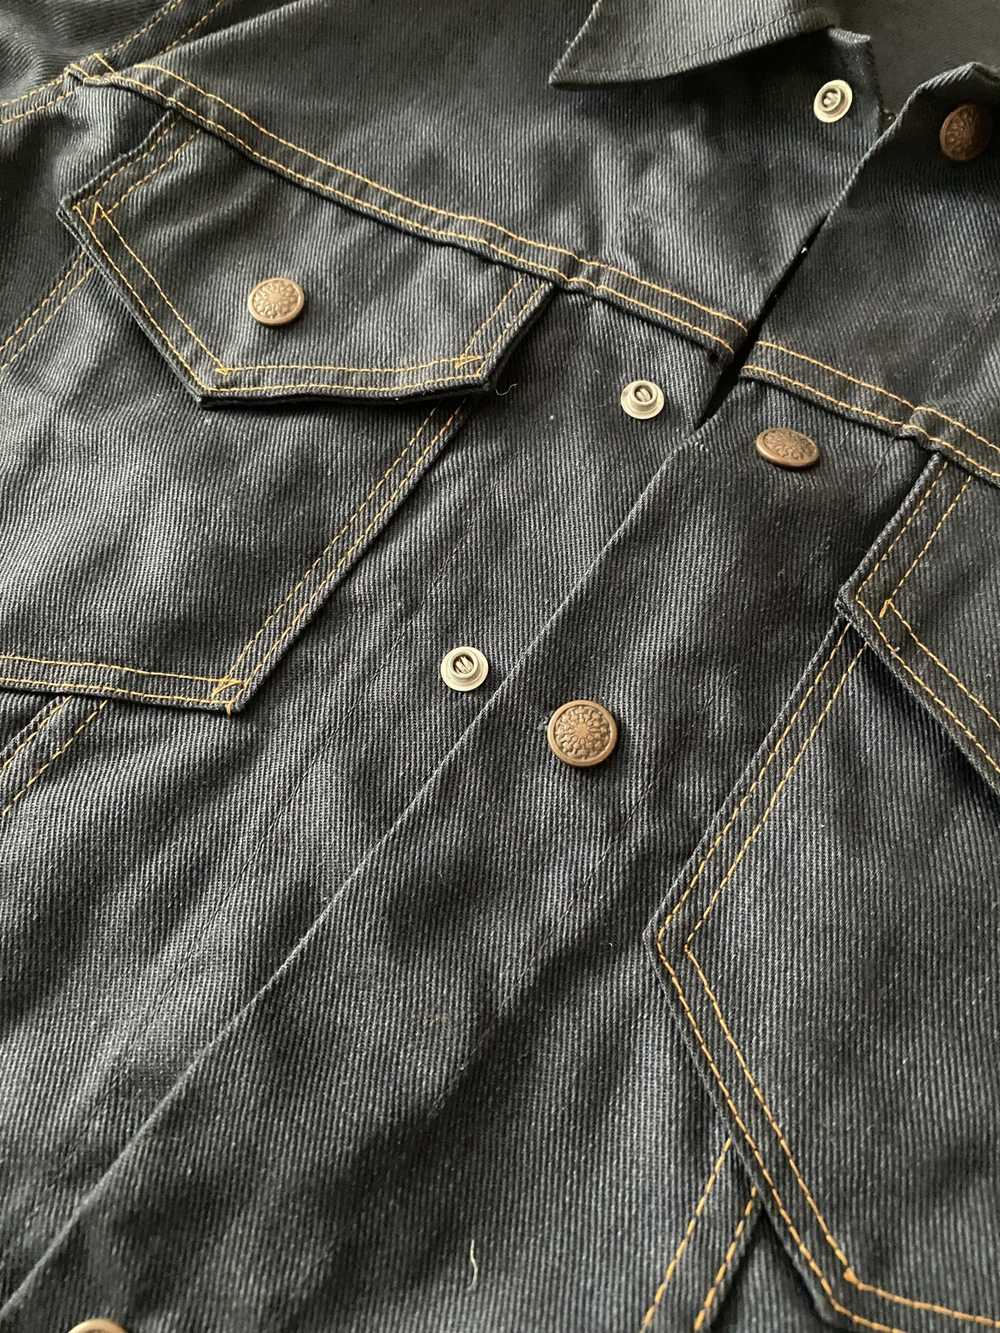 Vintage Vintage Montgomery Ward Denim Jacket - image 4